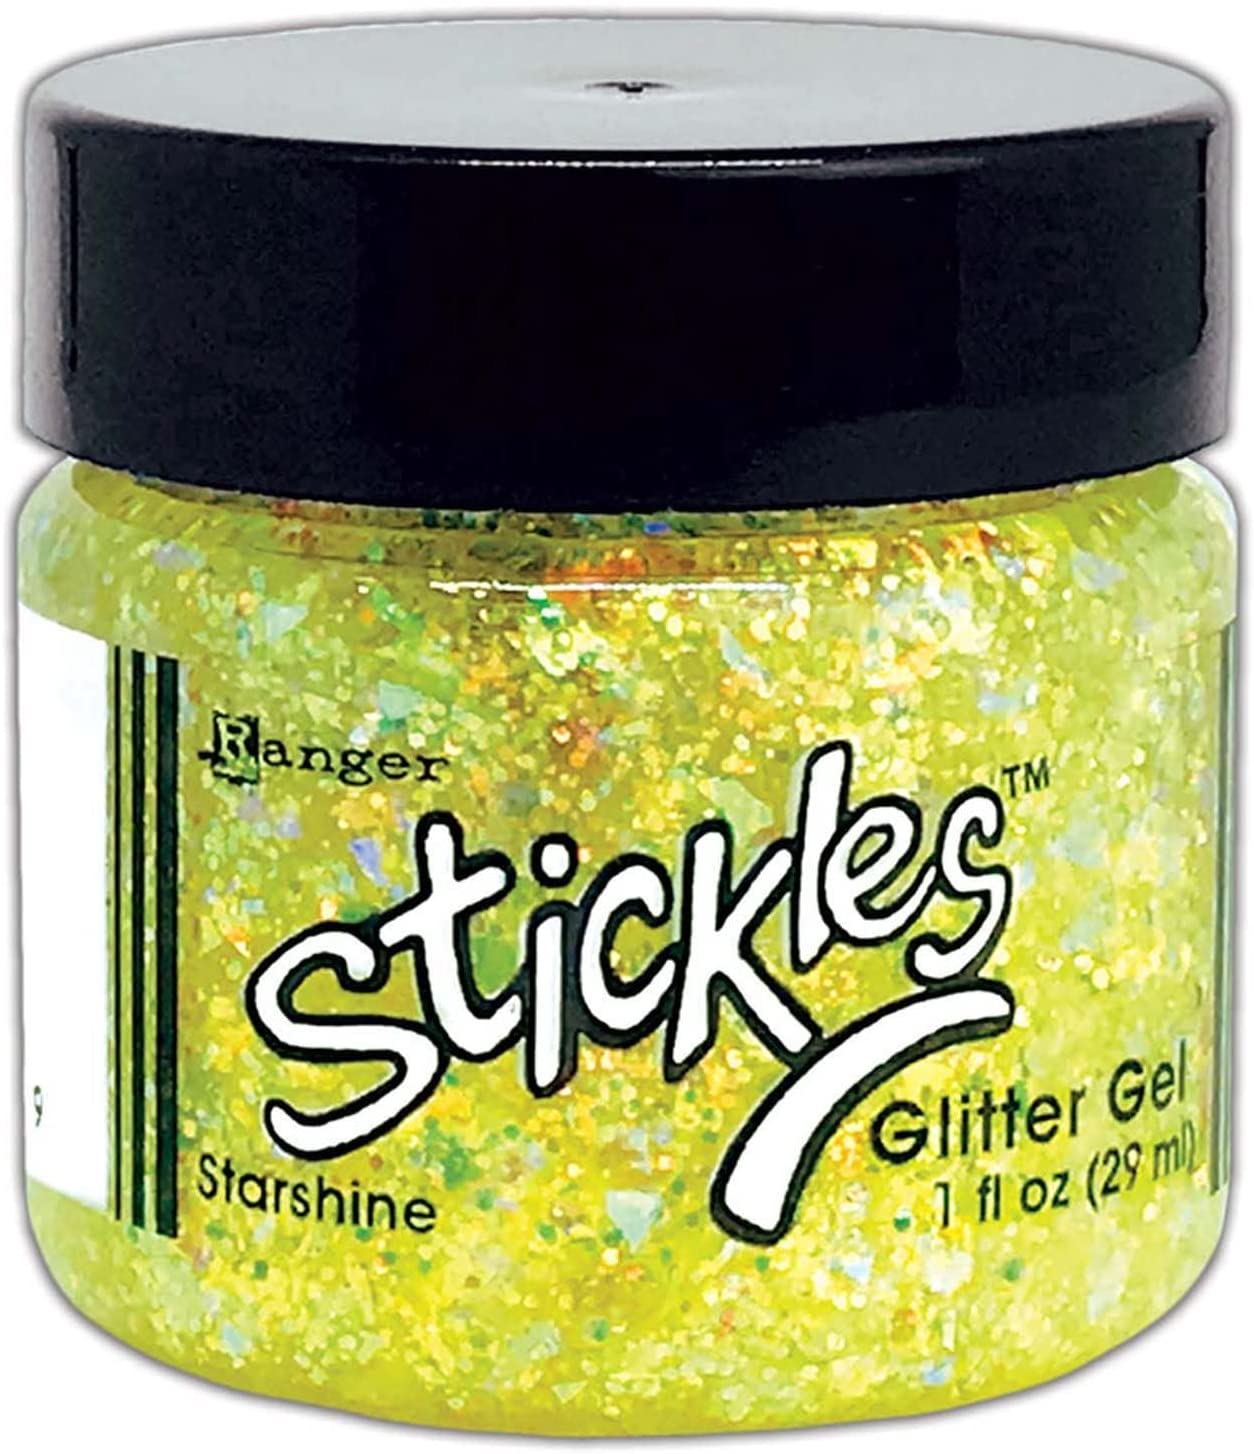 Starshine Glitter Gel Stickles